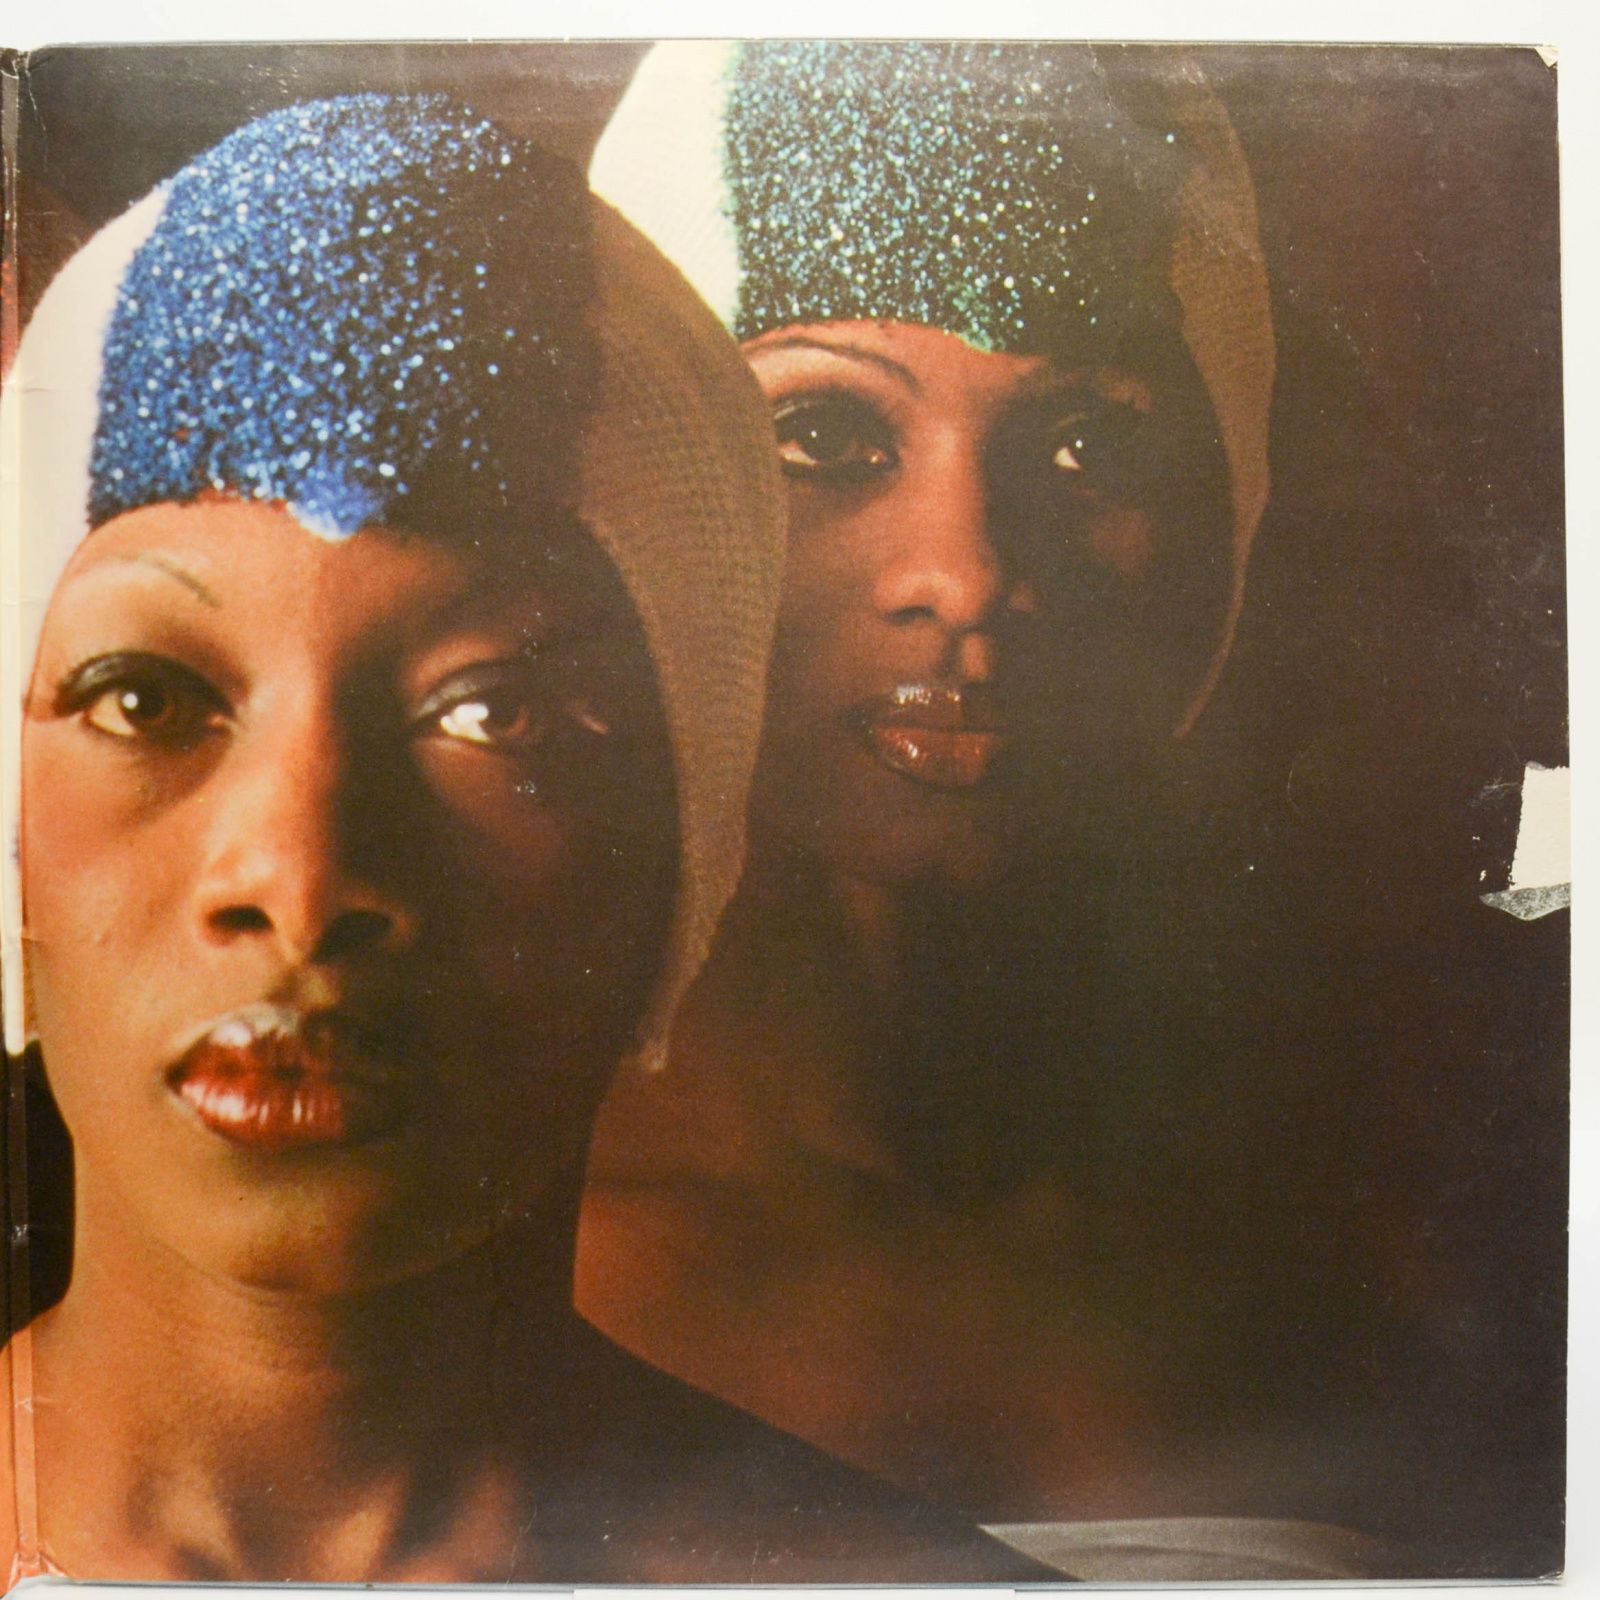 Boney M. — Nightflight To Venus, 1978